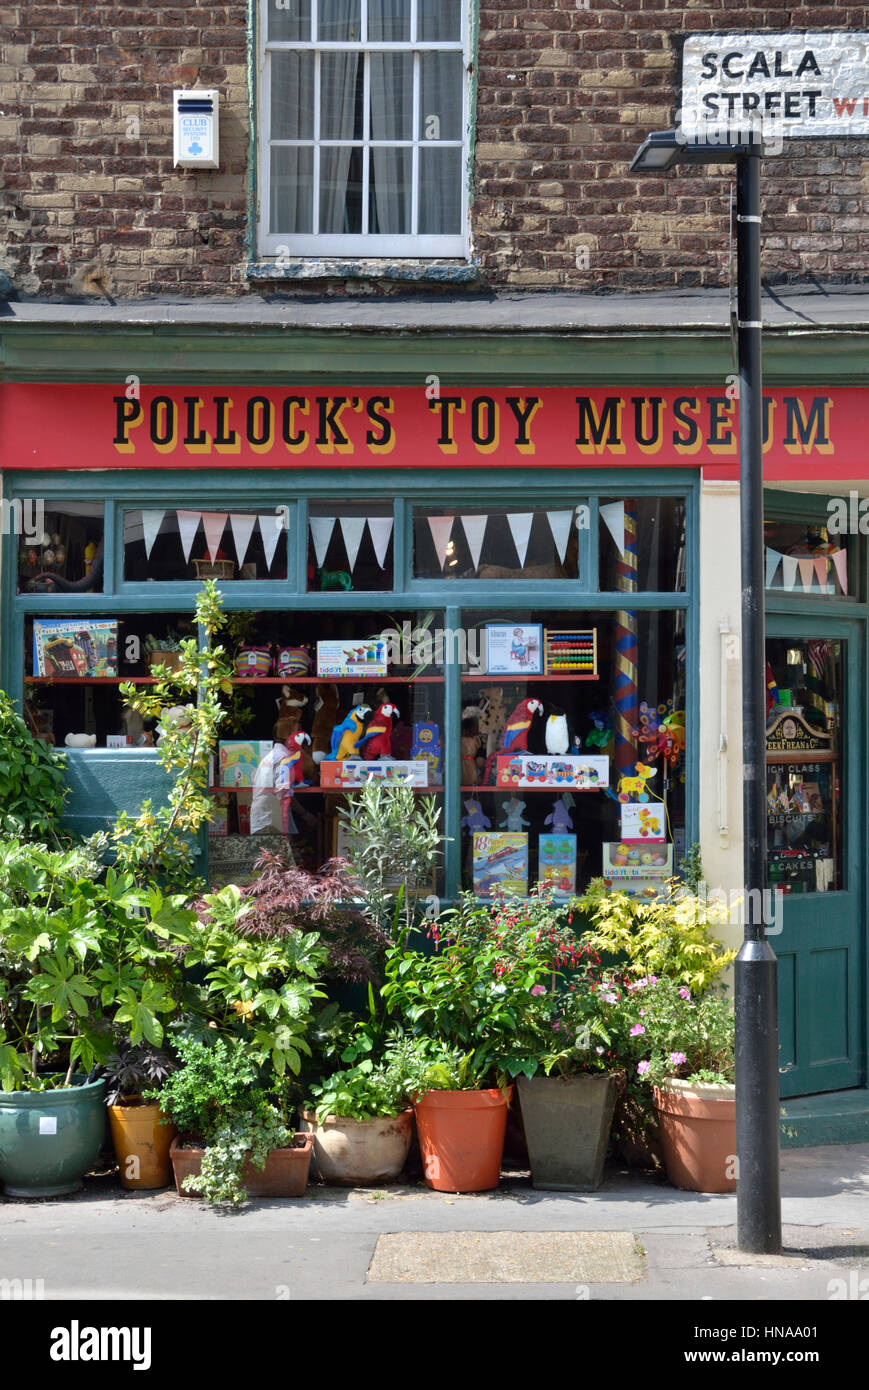 Pollocks Toy Museum, London, UK Stockfoto